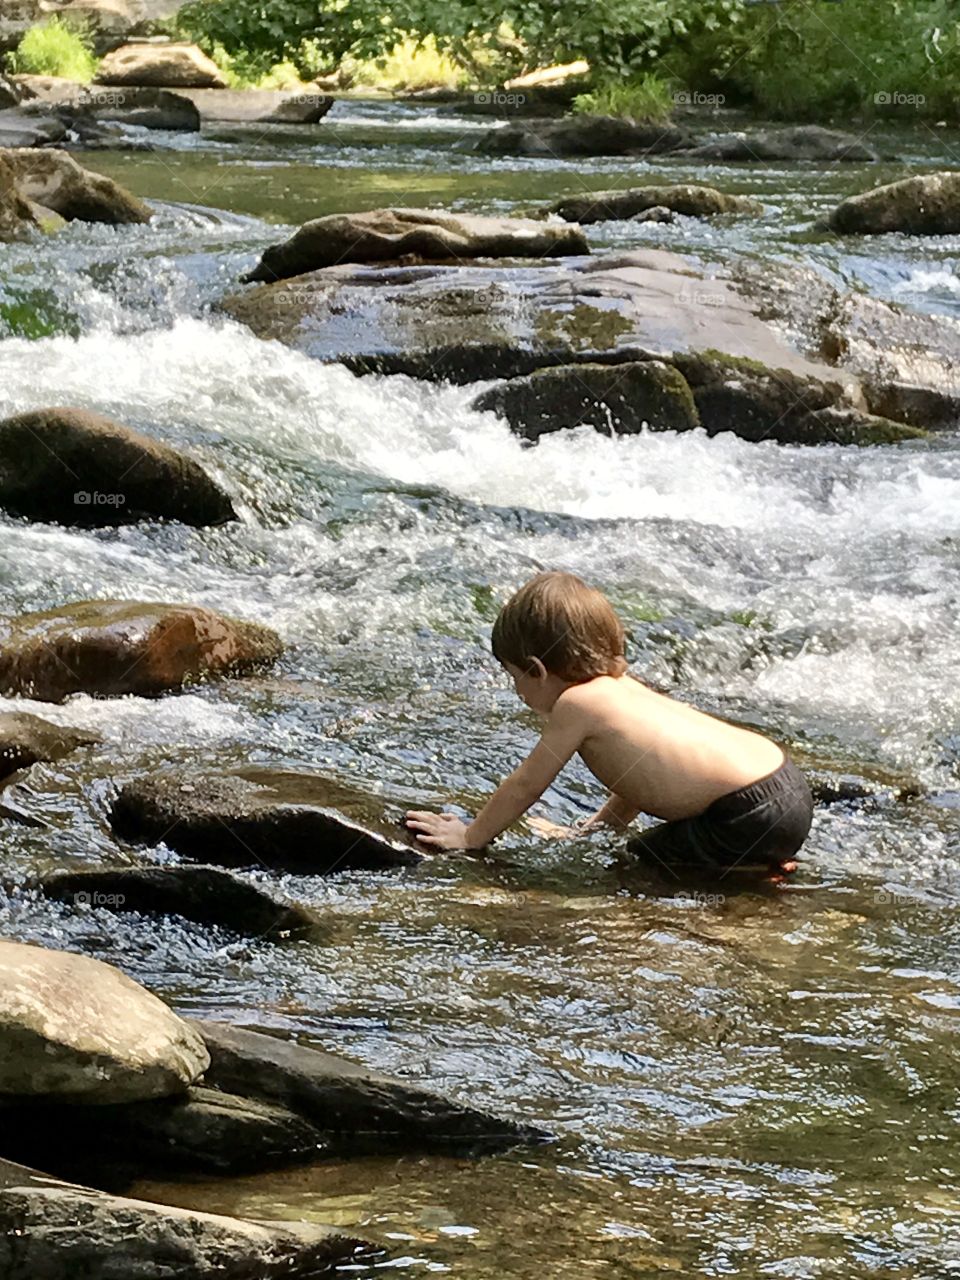 Exploring the river in Tellico Plains, TN